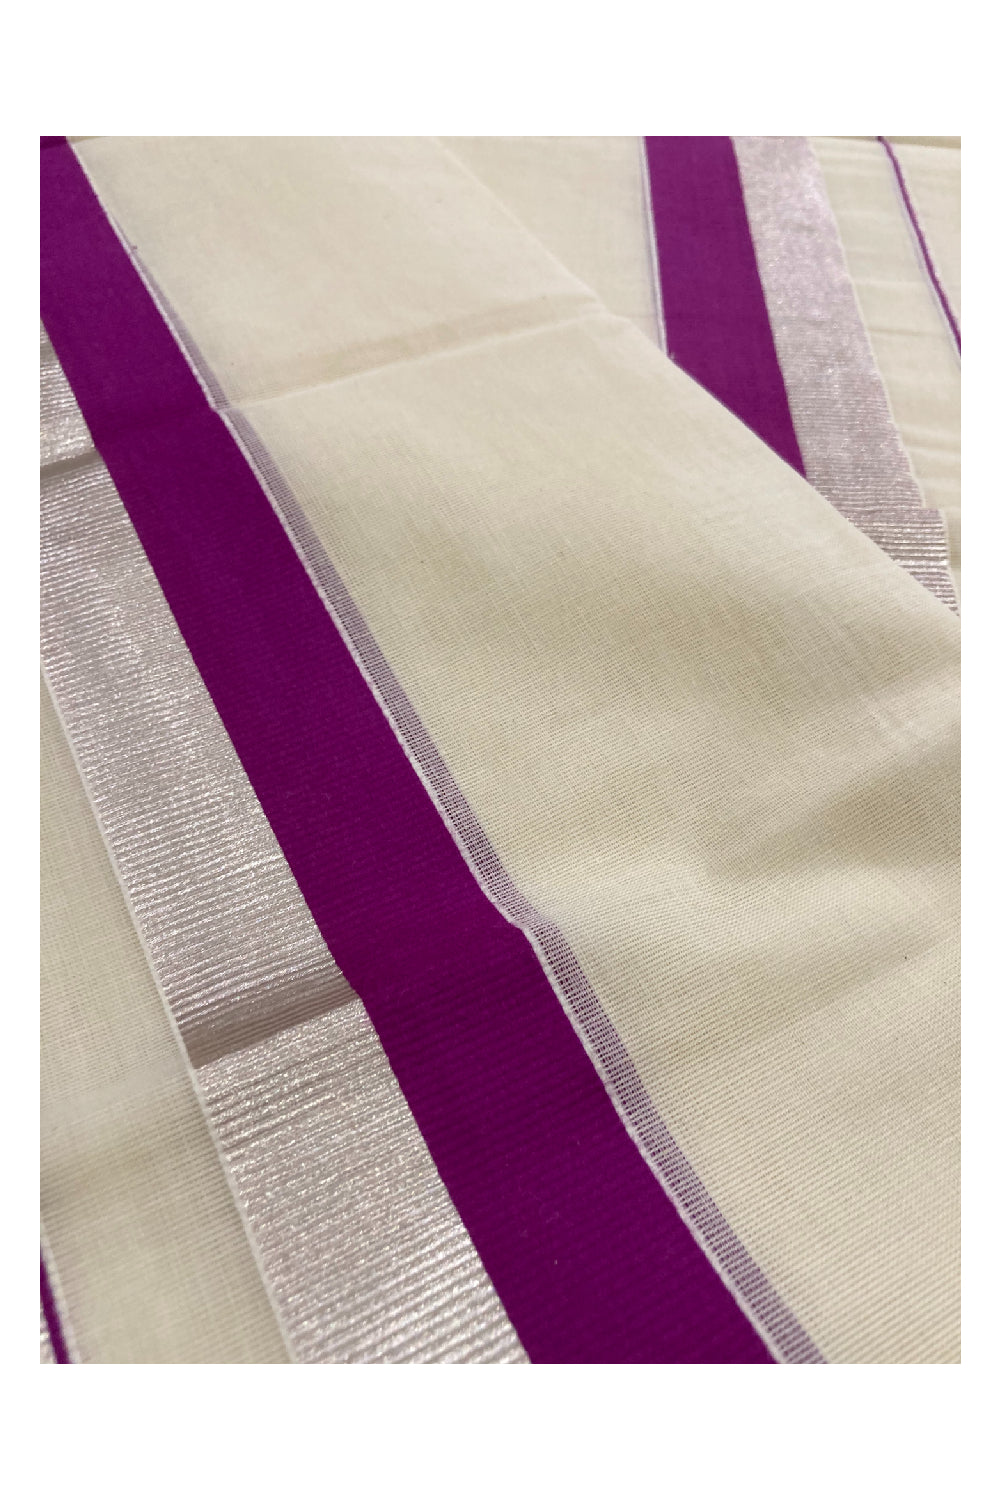 Kerala Cotton Double Set Mundu with Violet and Silver Kasavu Border (2.80 m Mundum Neriyathum)